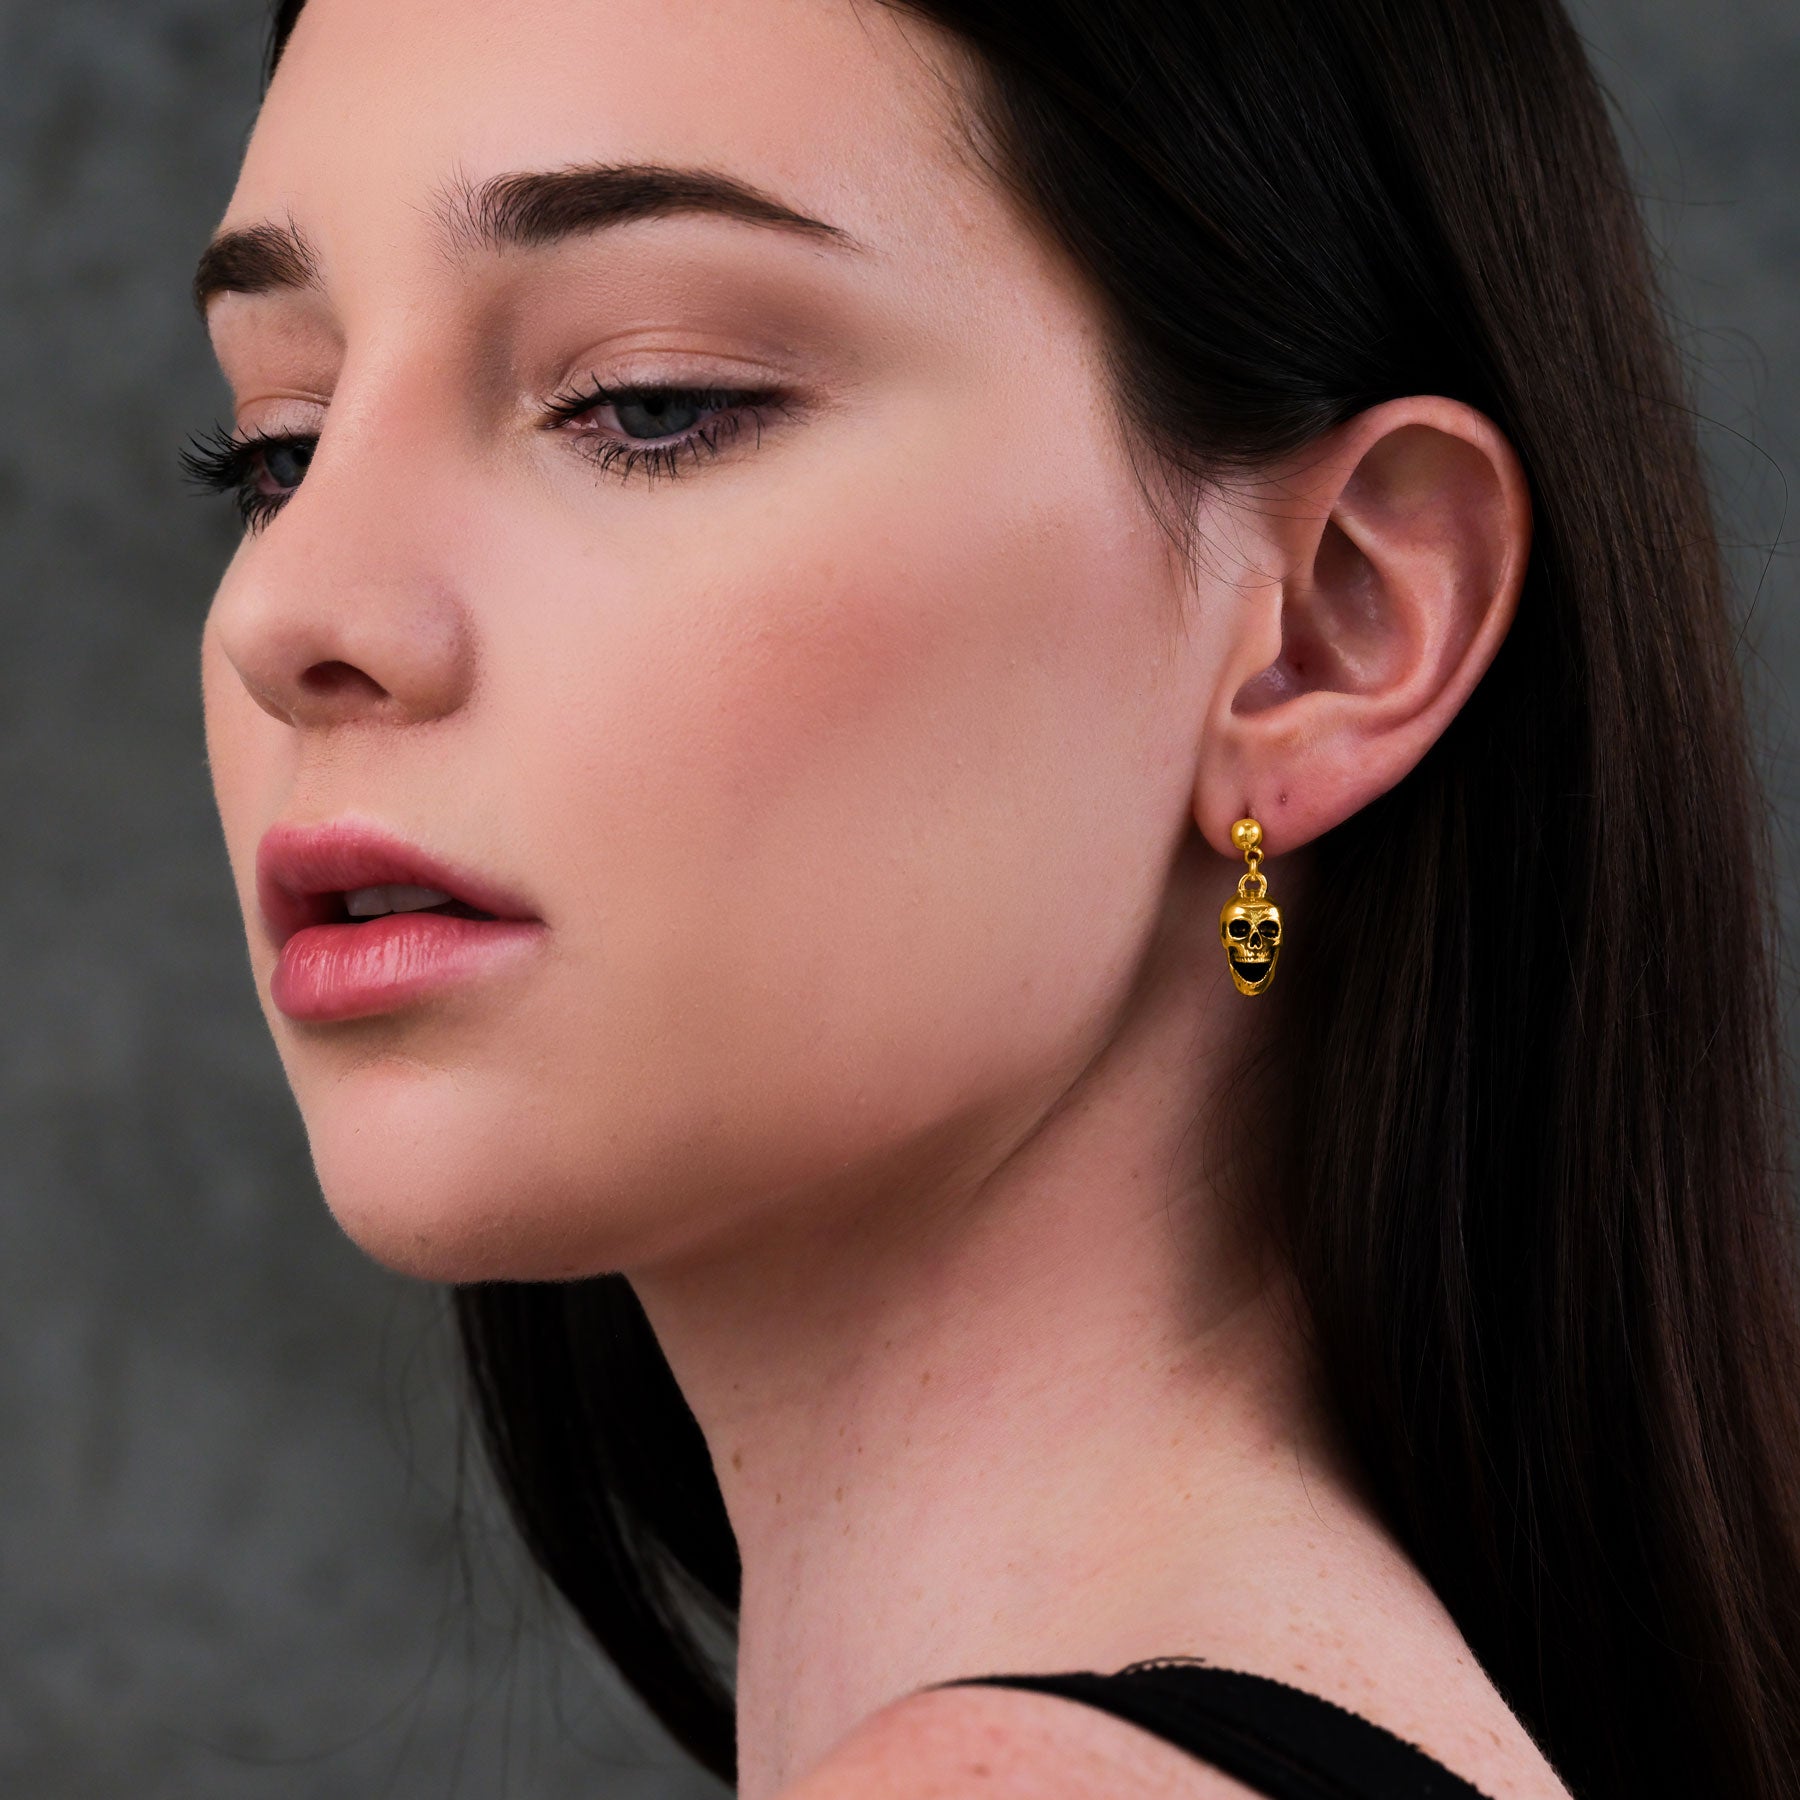 Unisex gothic design jewellery earrings 